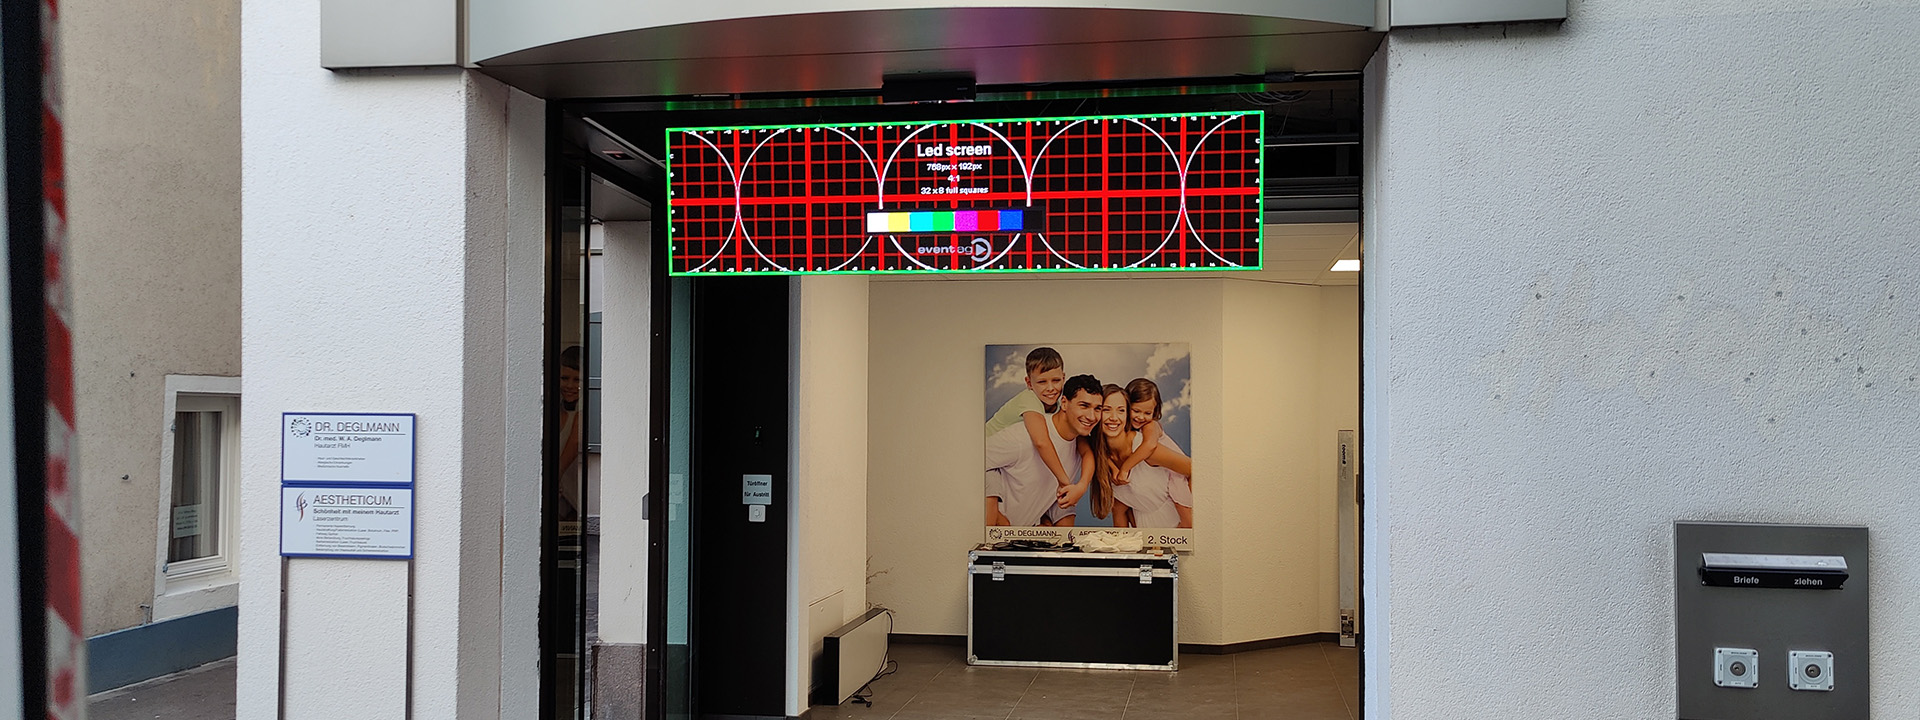 LED-Screen im Eingang